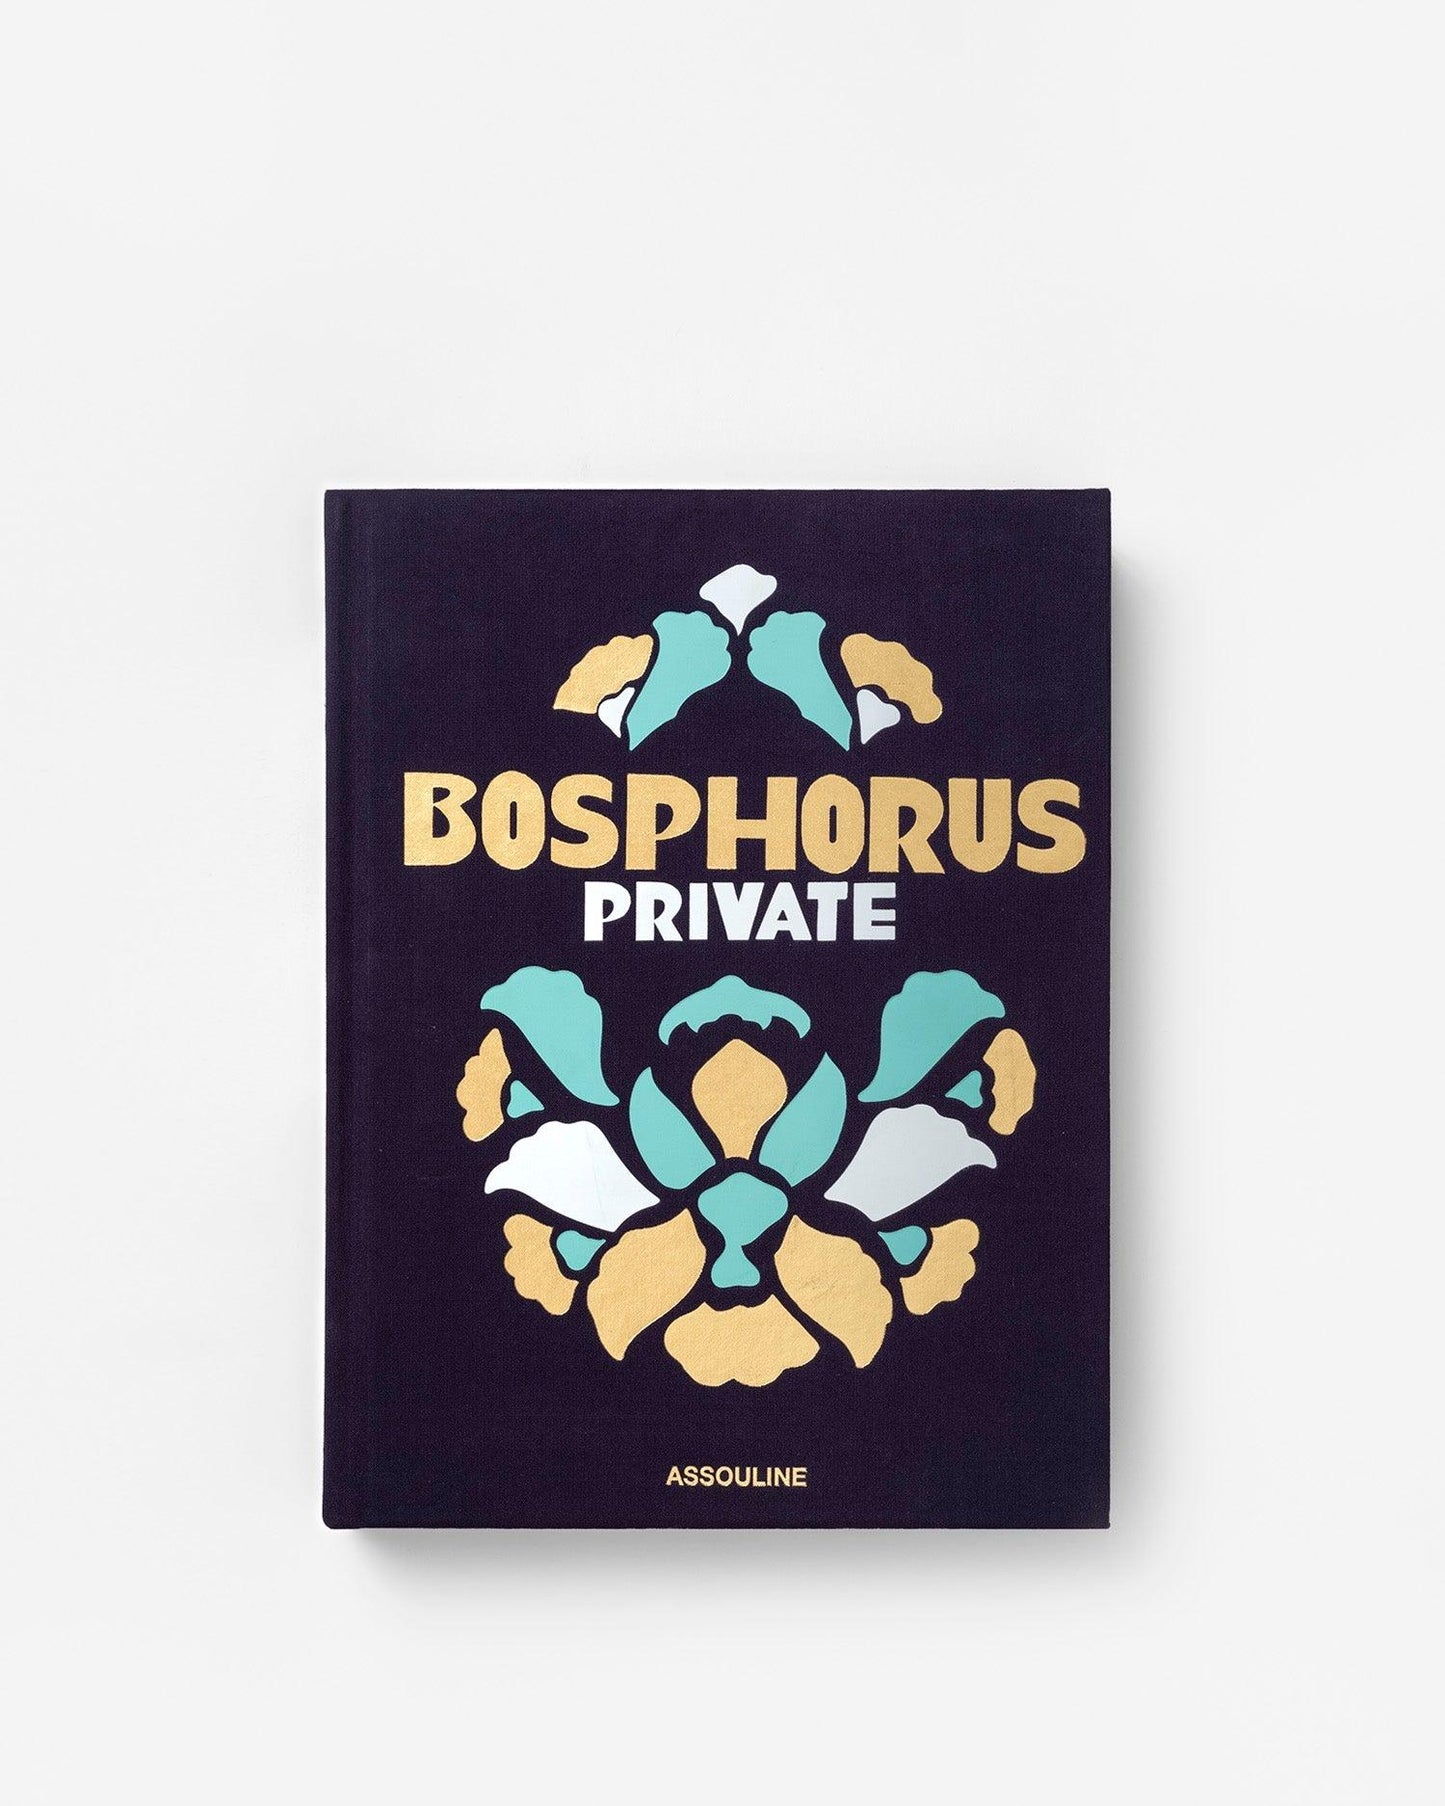 Assouline Bosphorus Private